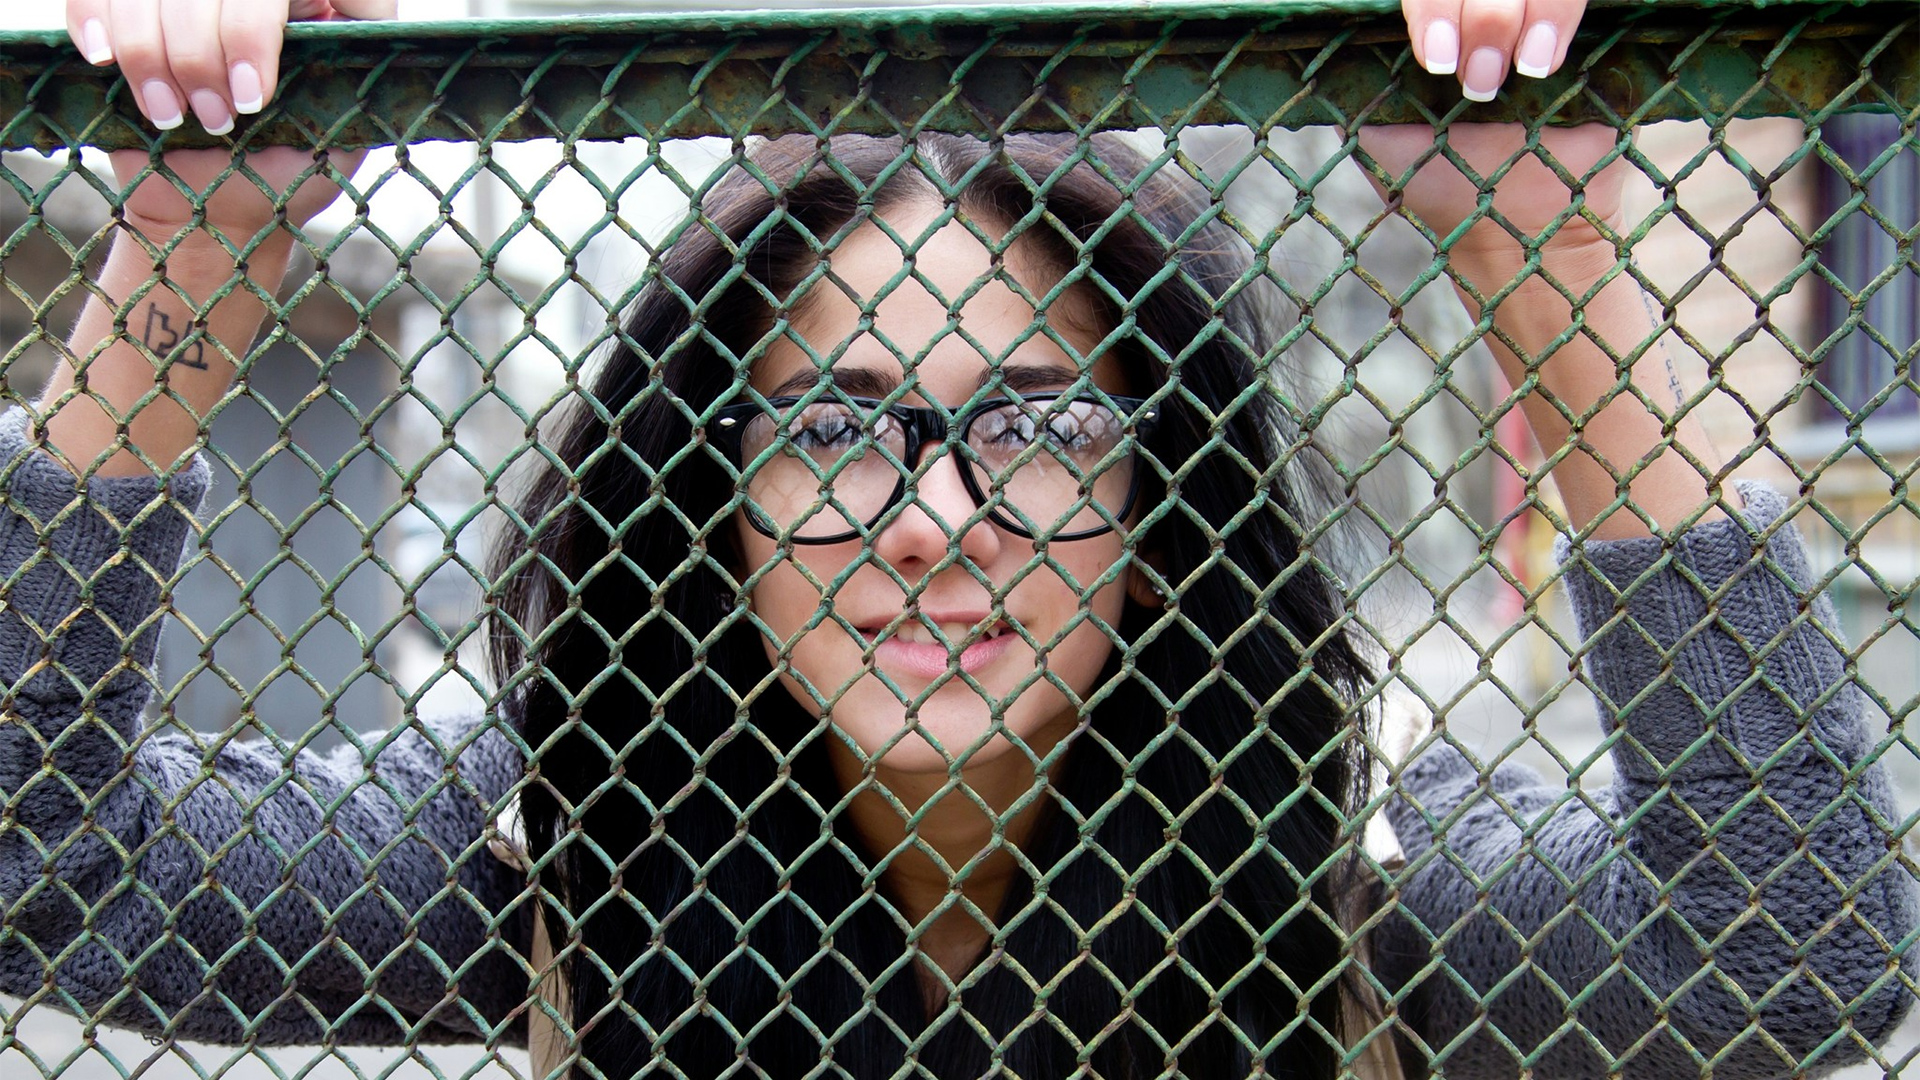 Women Model Black Hair Glasses Biting Lip Chain Link Fence Fence Sweater 1920x1080